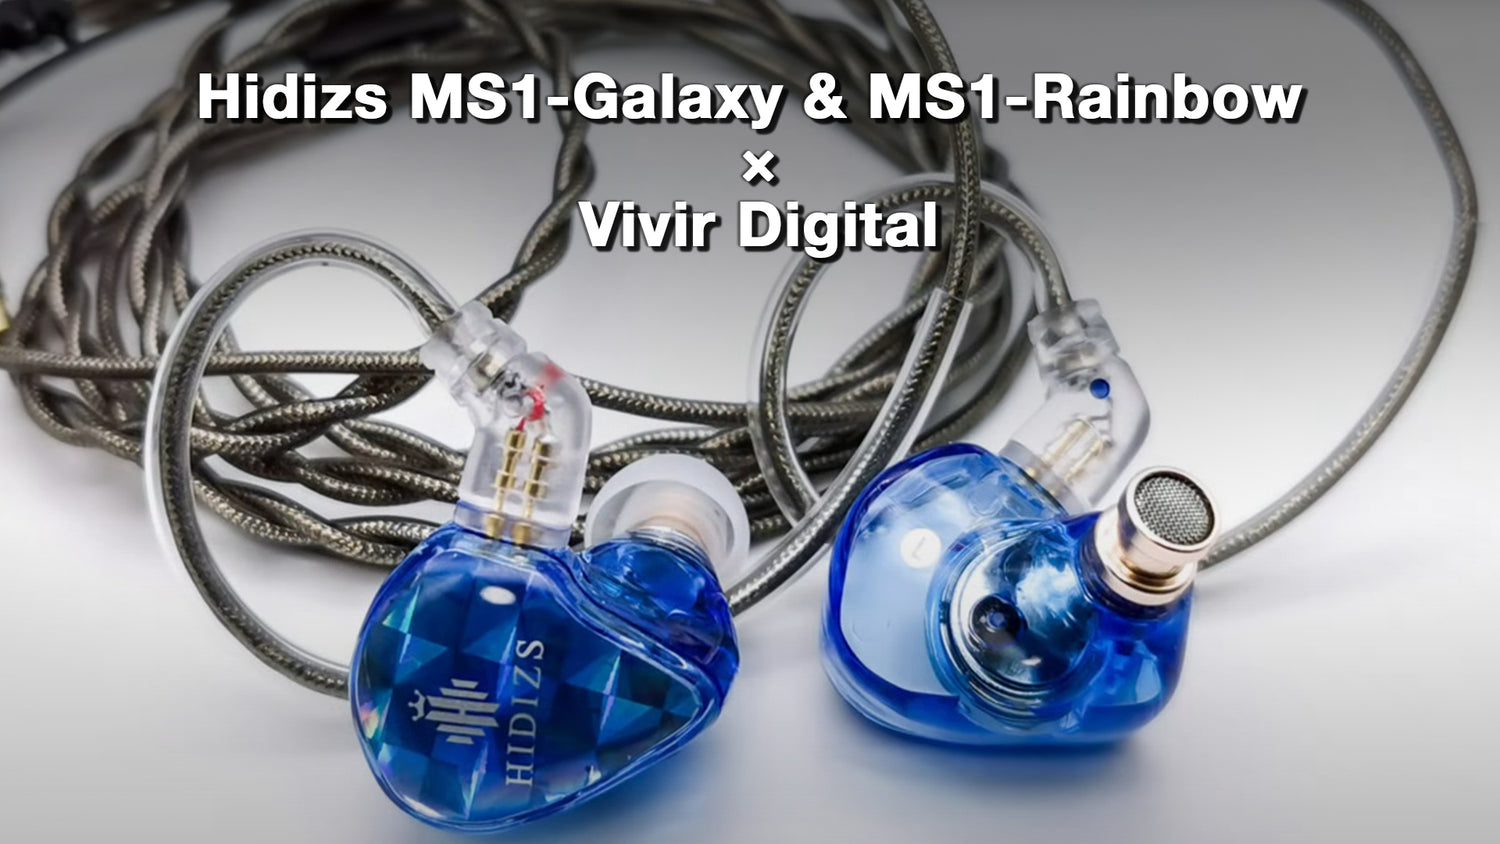 Hidizs MS1-Galaxy & MS1-Rainbow Review - Vivir Digital